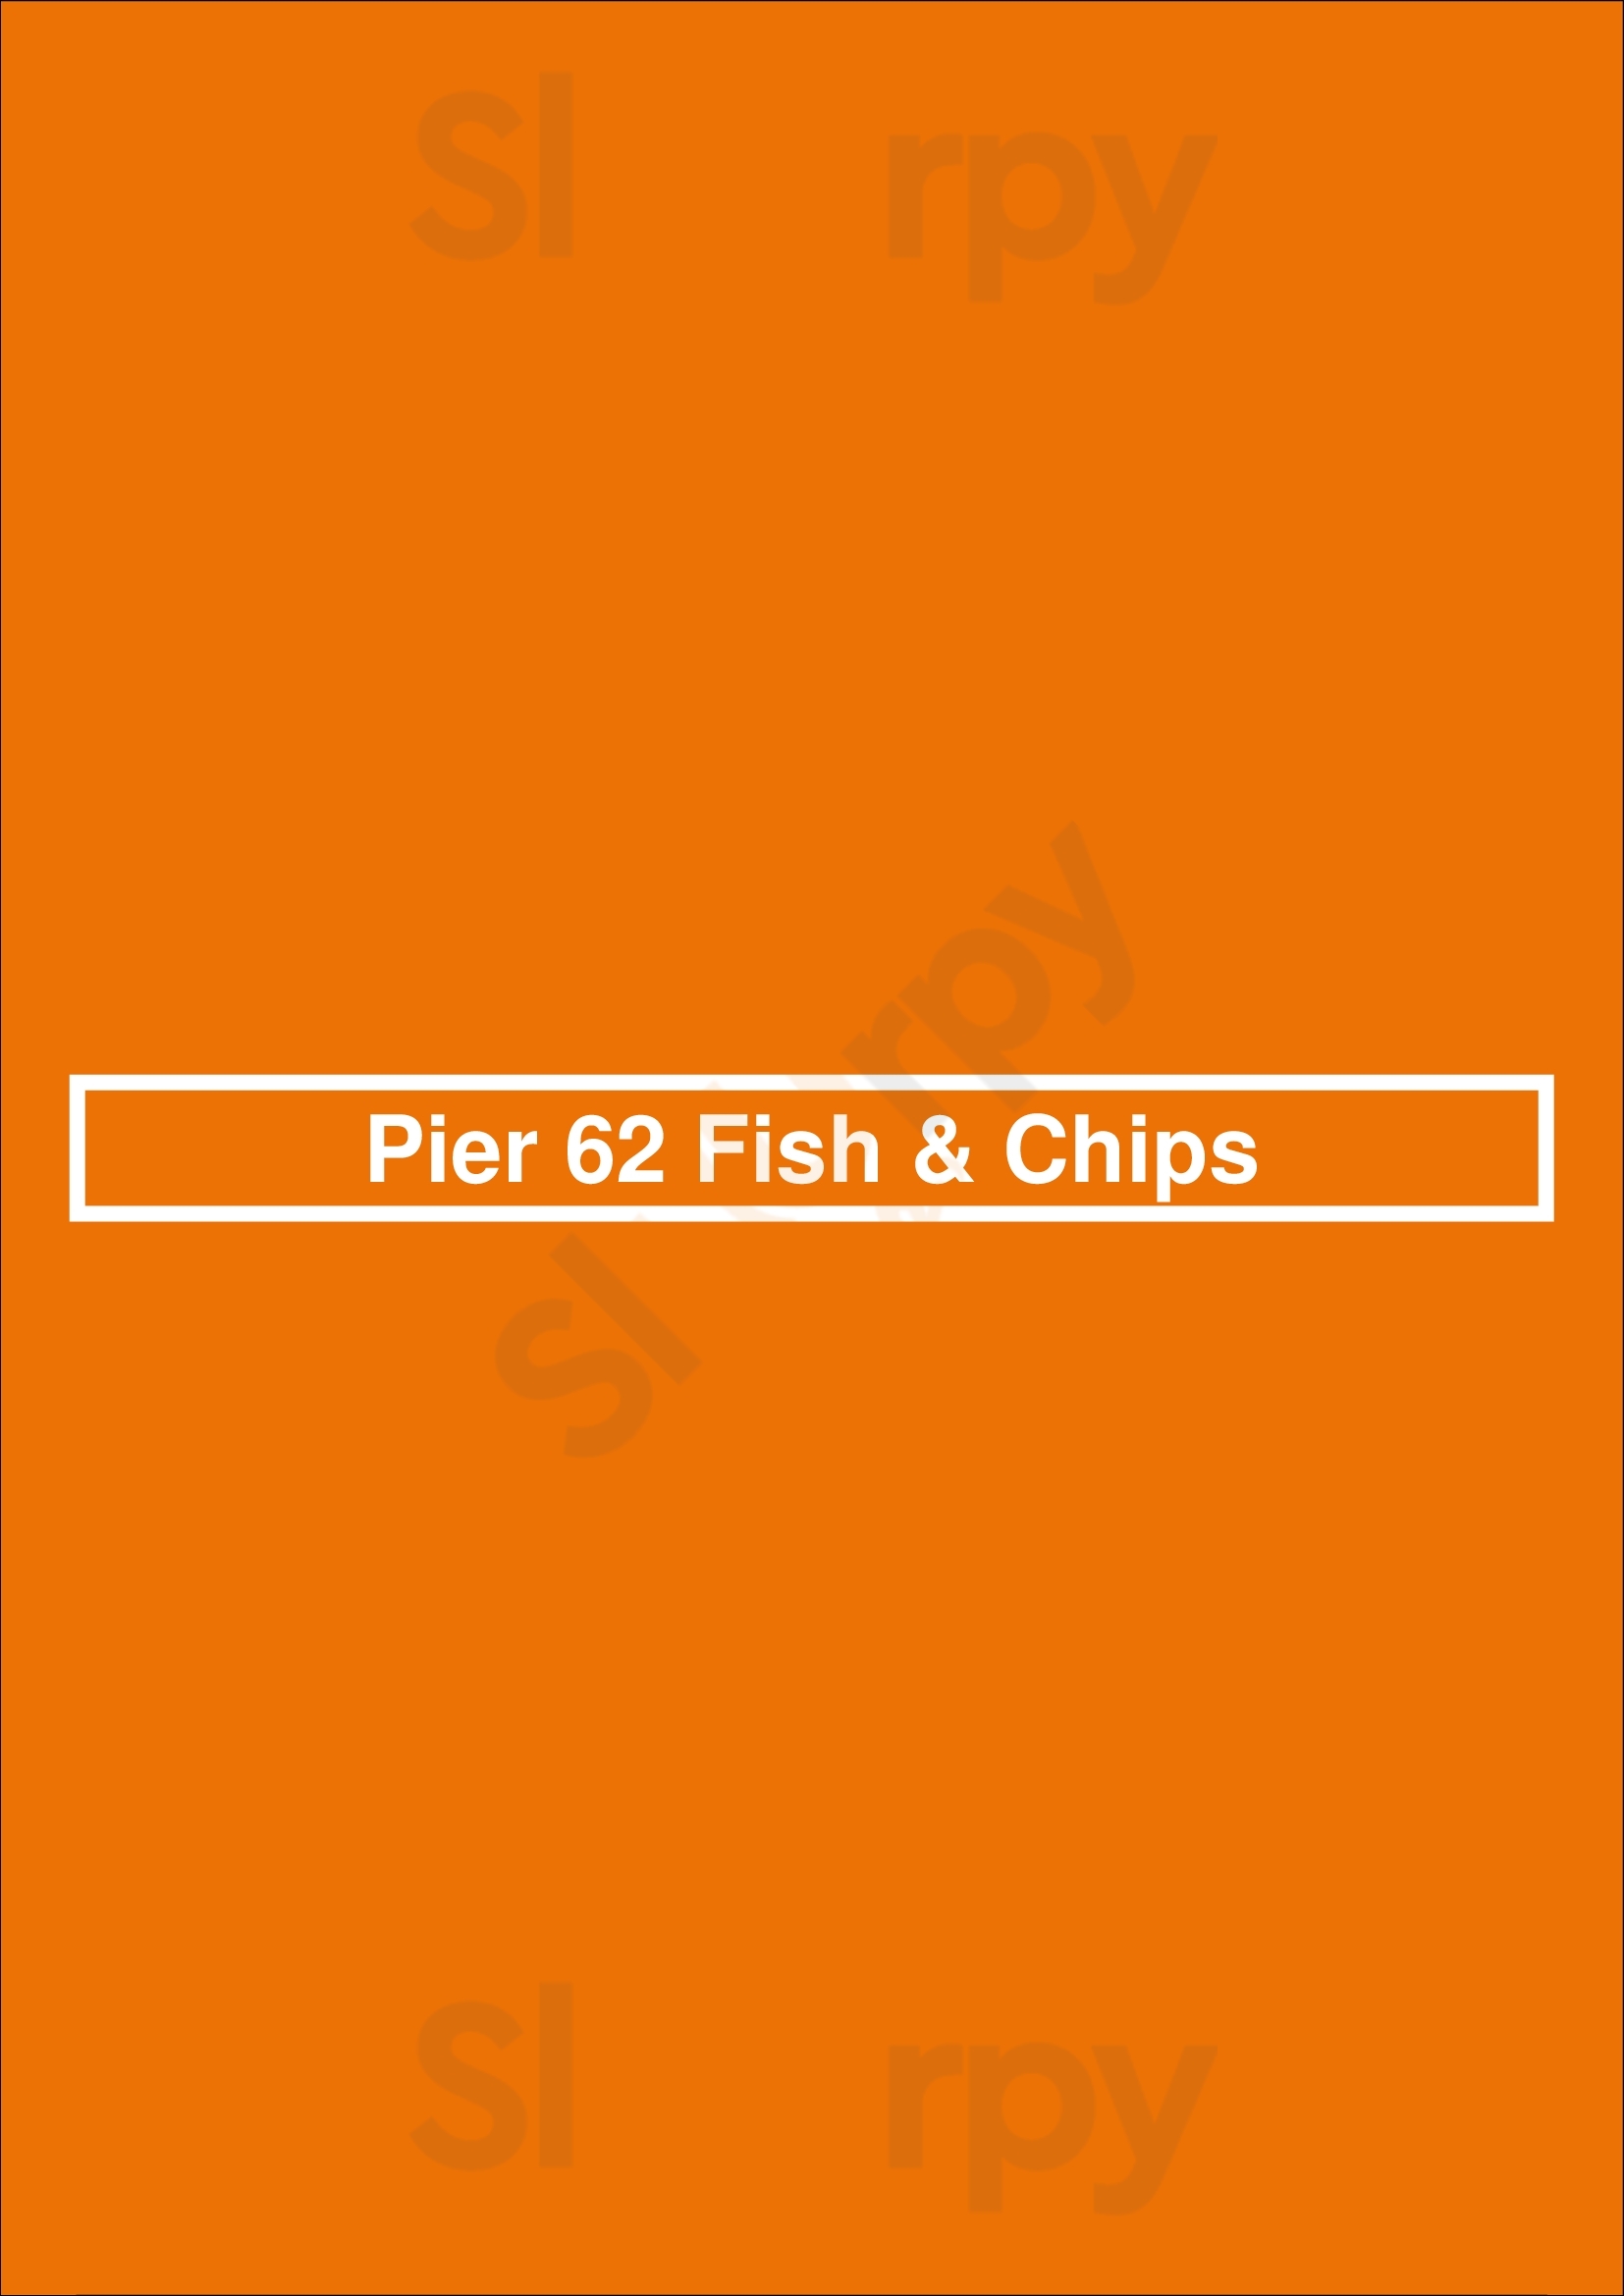 Pier 62 Fish & Chips Amsterdam Menu - 1